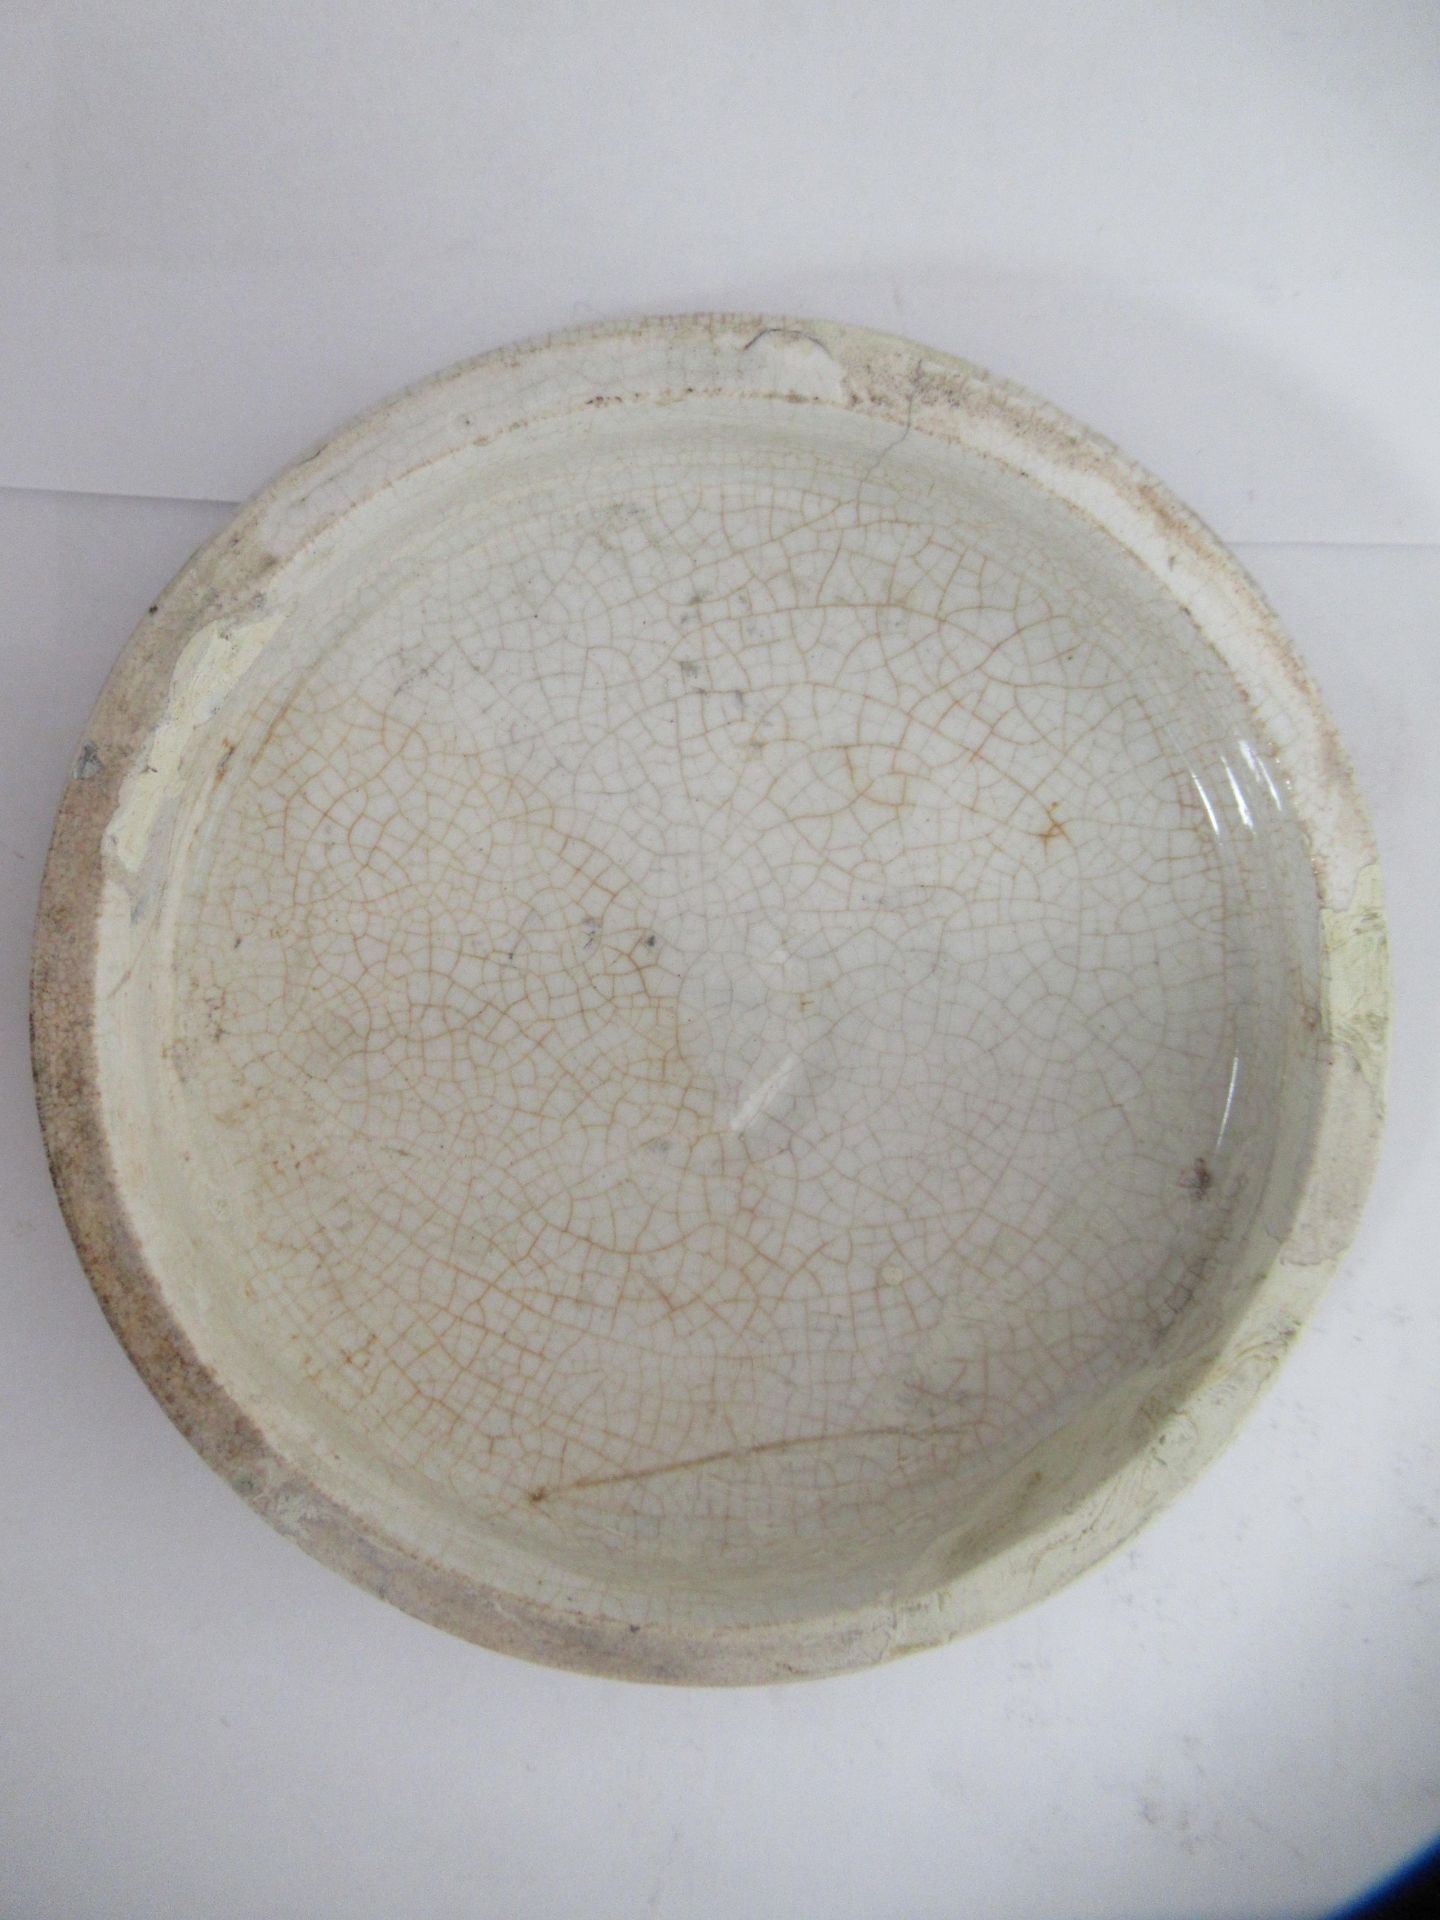 6x Prattware ceramic lids including 'The Residence of Anne Hathaway', 'Strasburg', 'Albert Memorial' - Image 25 of 36